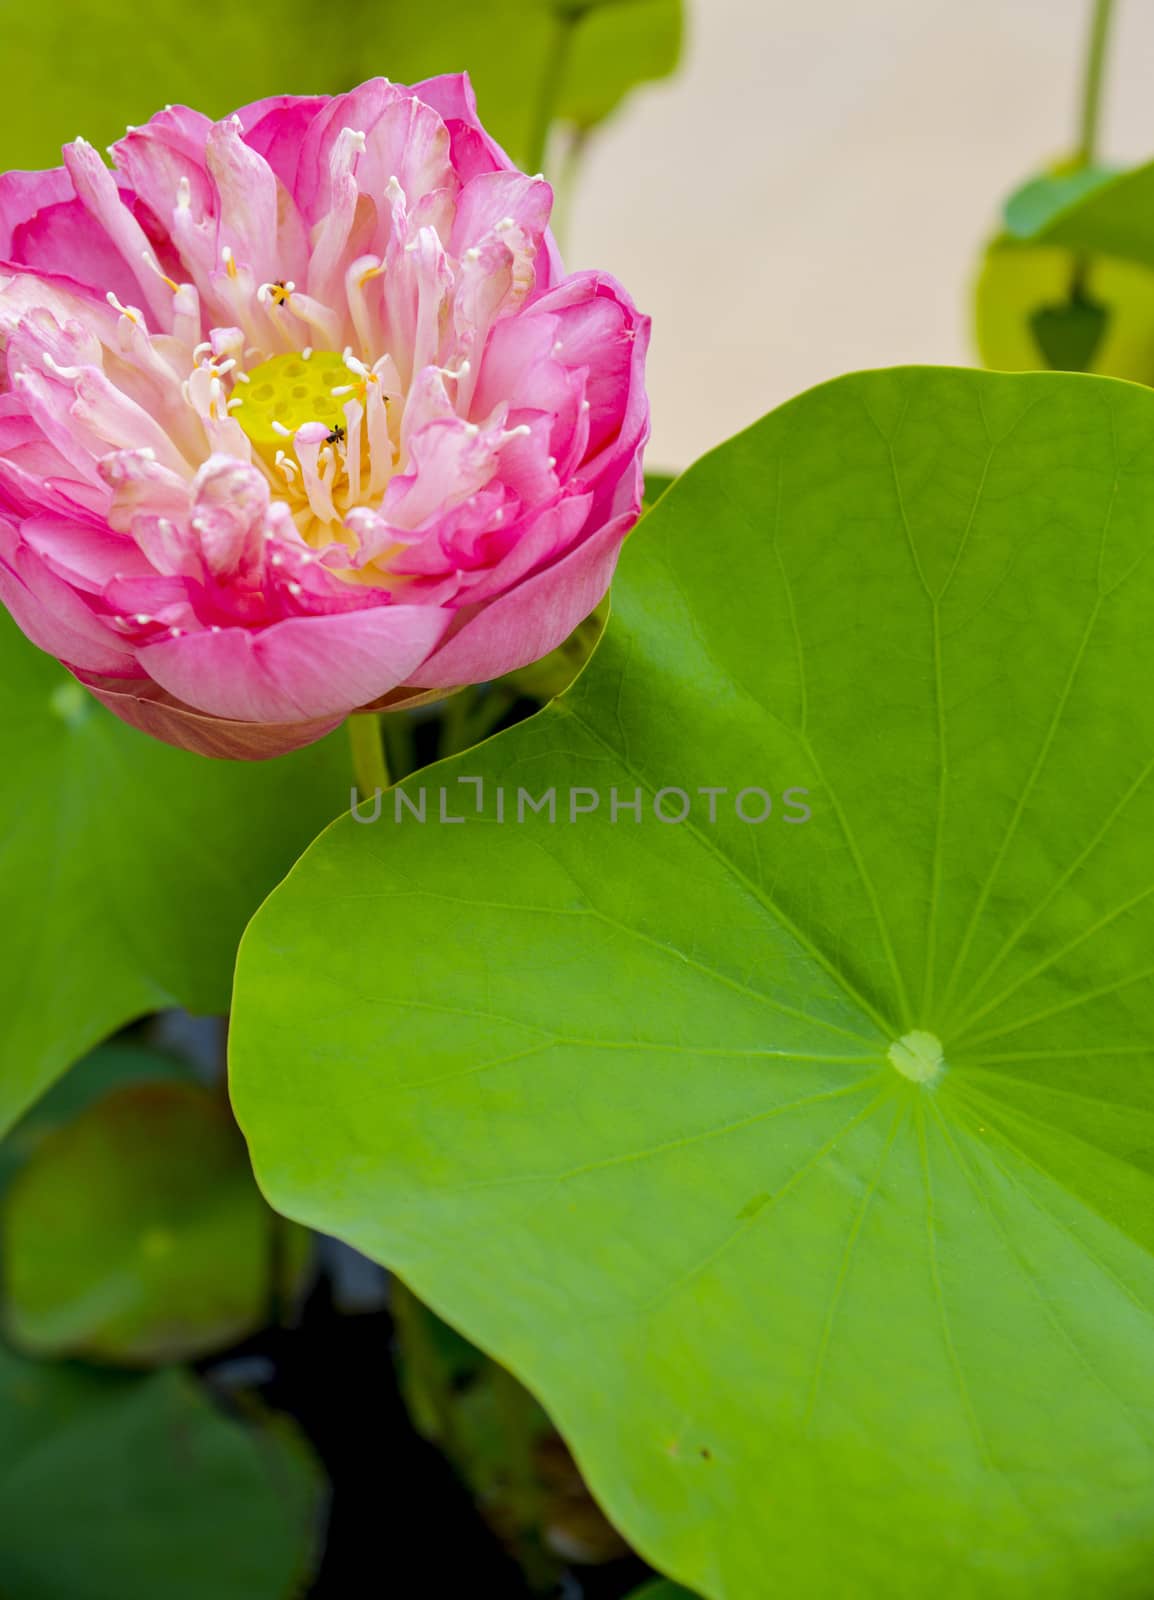 Pink lotus with green leaf1 by gjeerawut